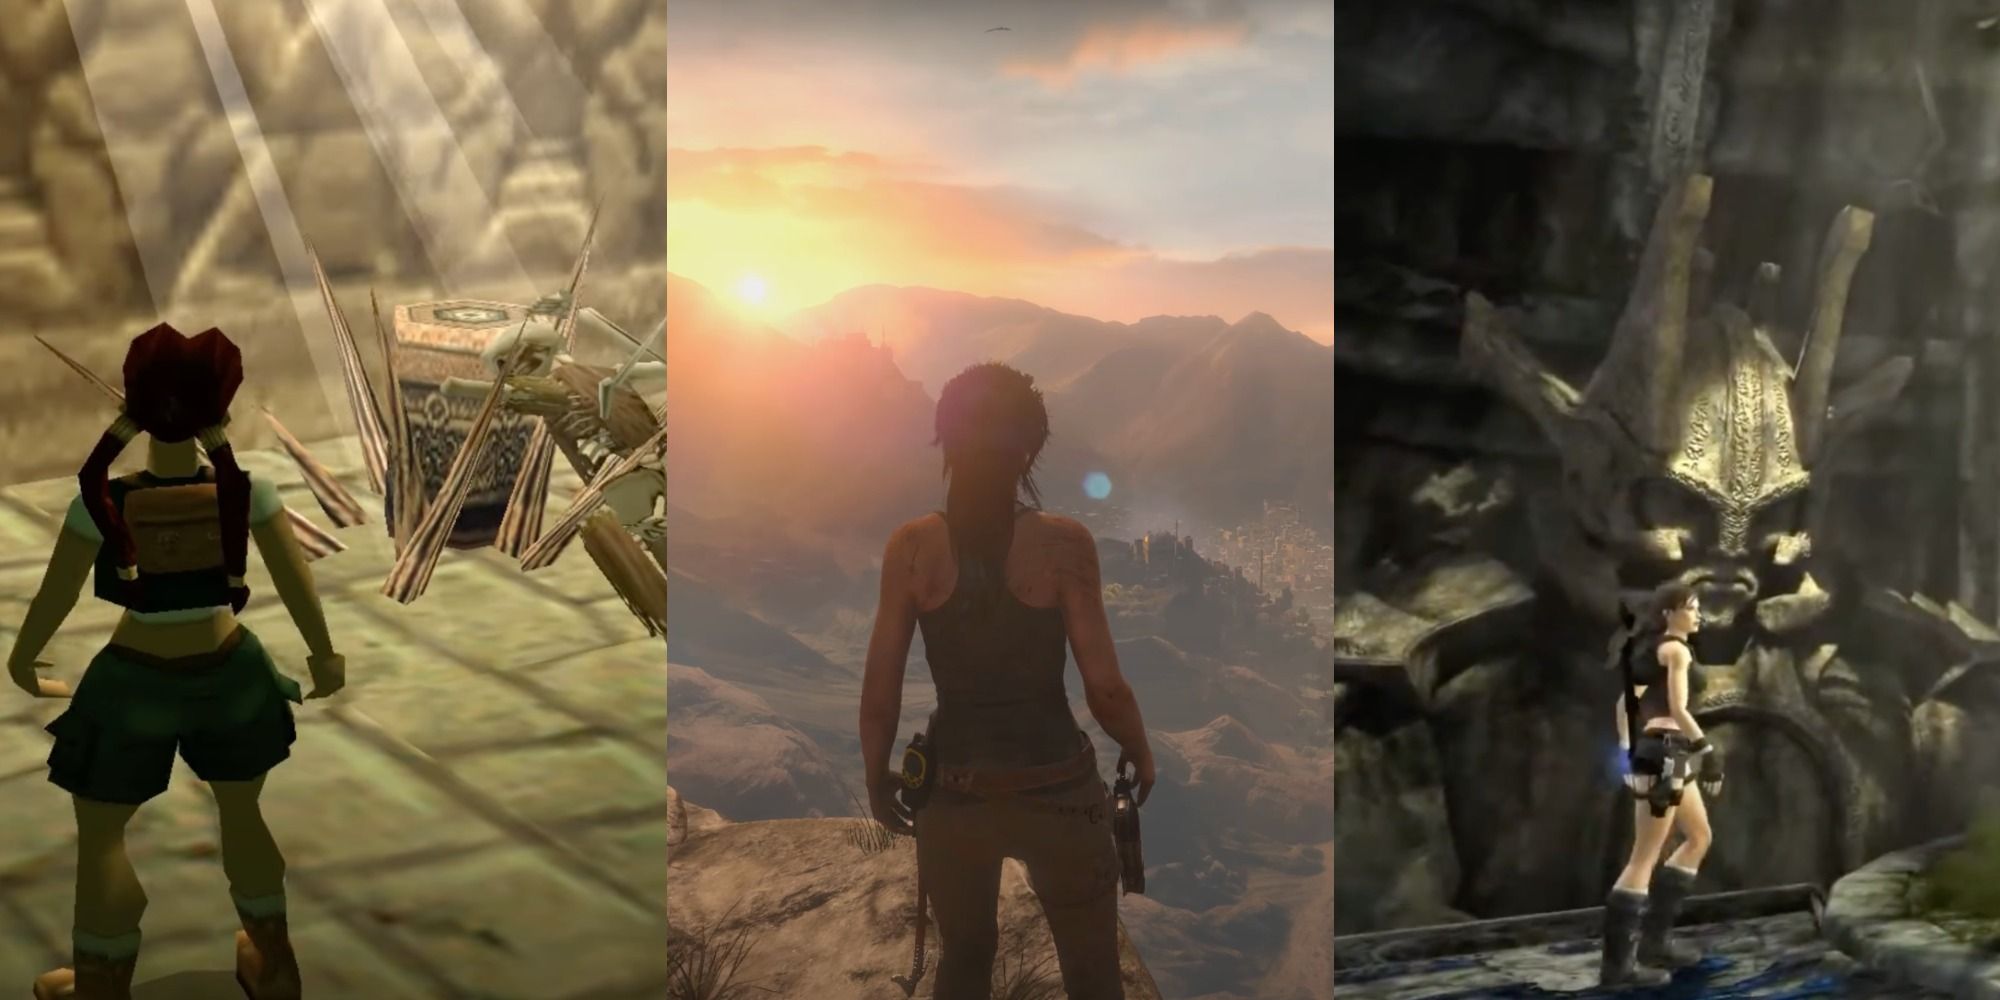 Lara in Kambodscha Tomb Raider Last Revelation, Lara in Syrien Aufstieg des Tomb Raider, Lara in Thailand Tomb Raider Underworld